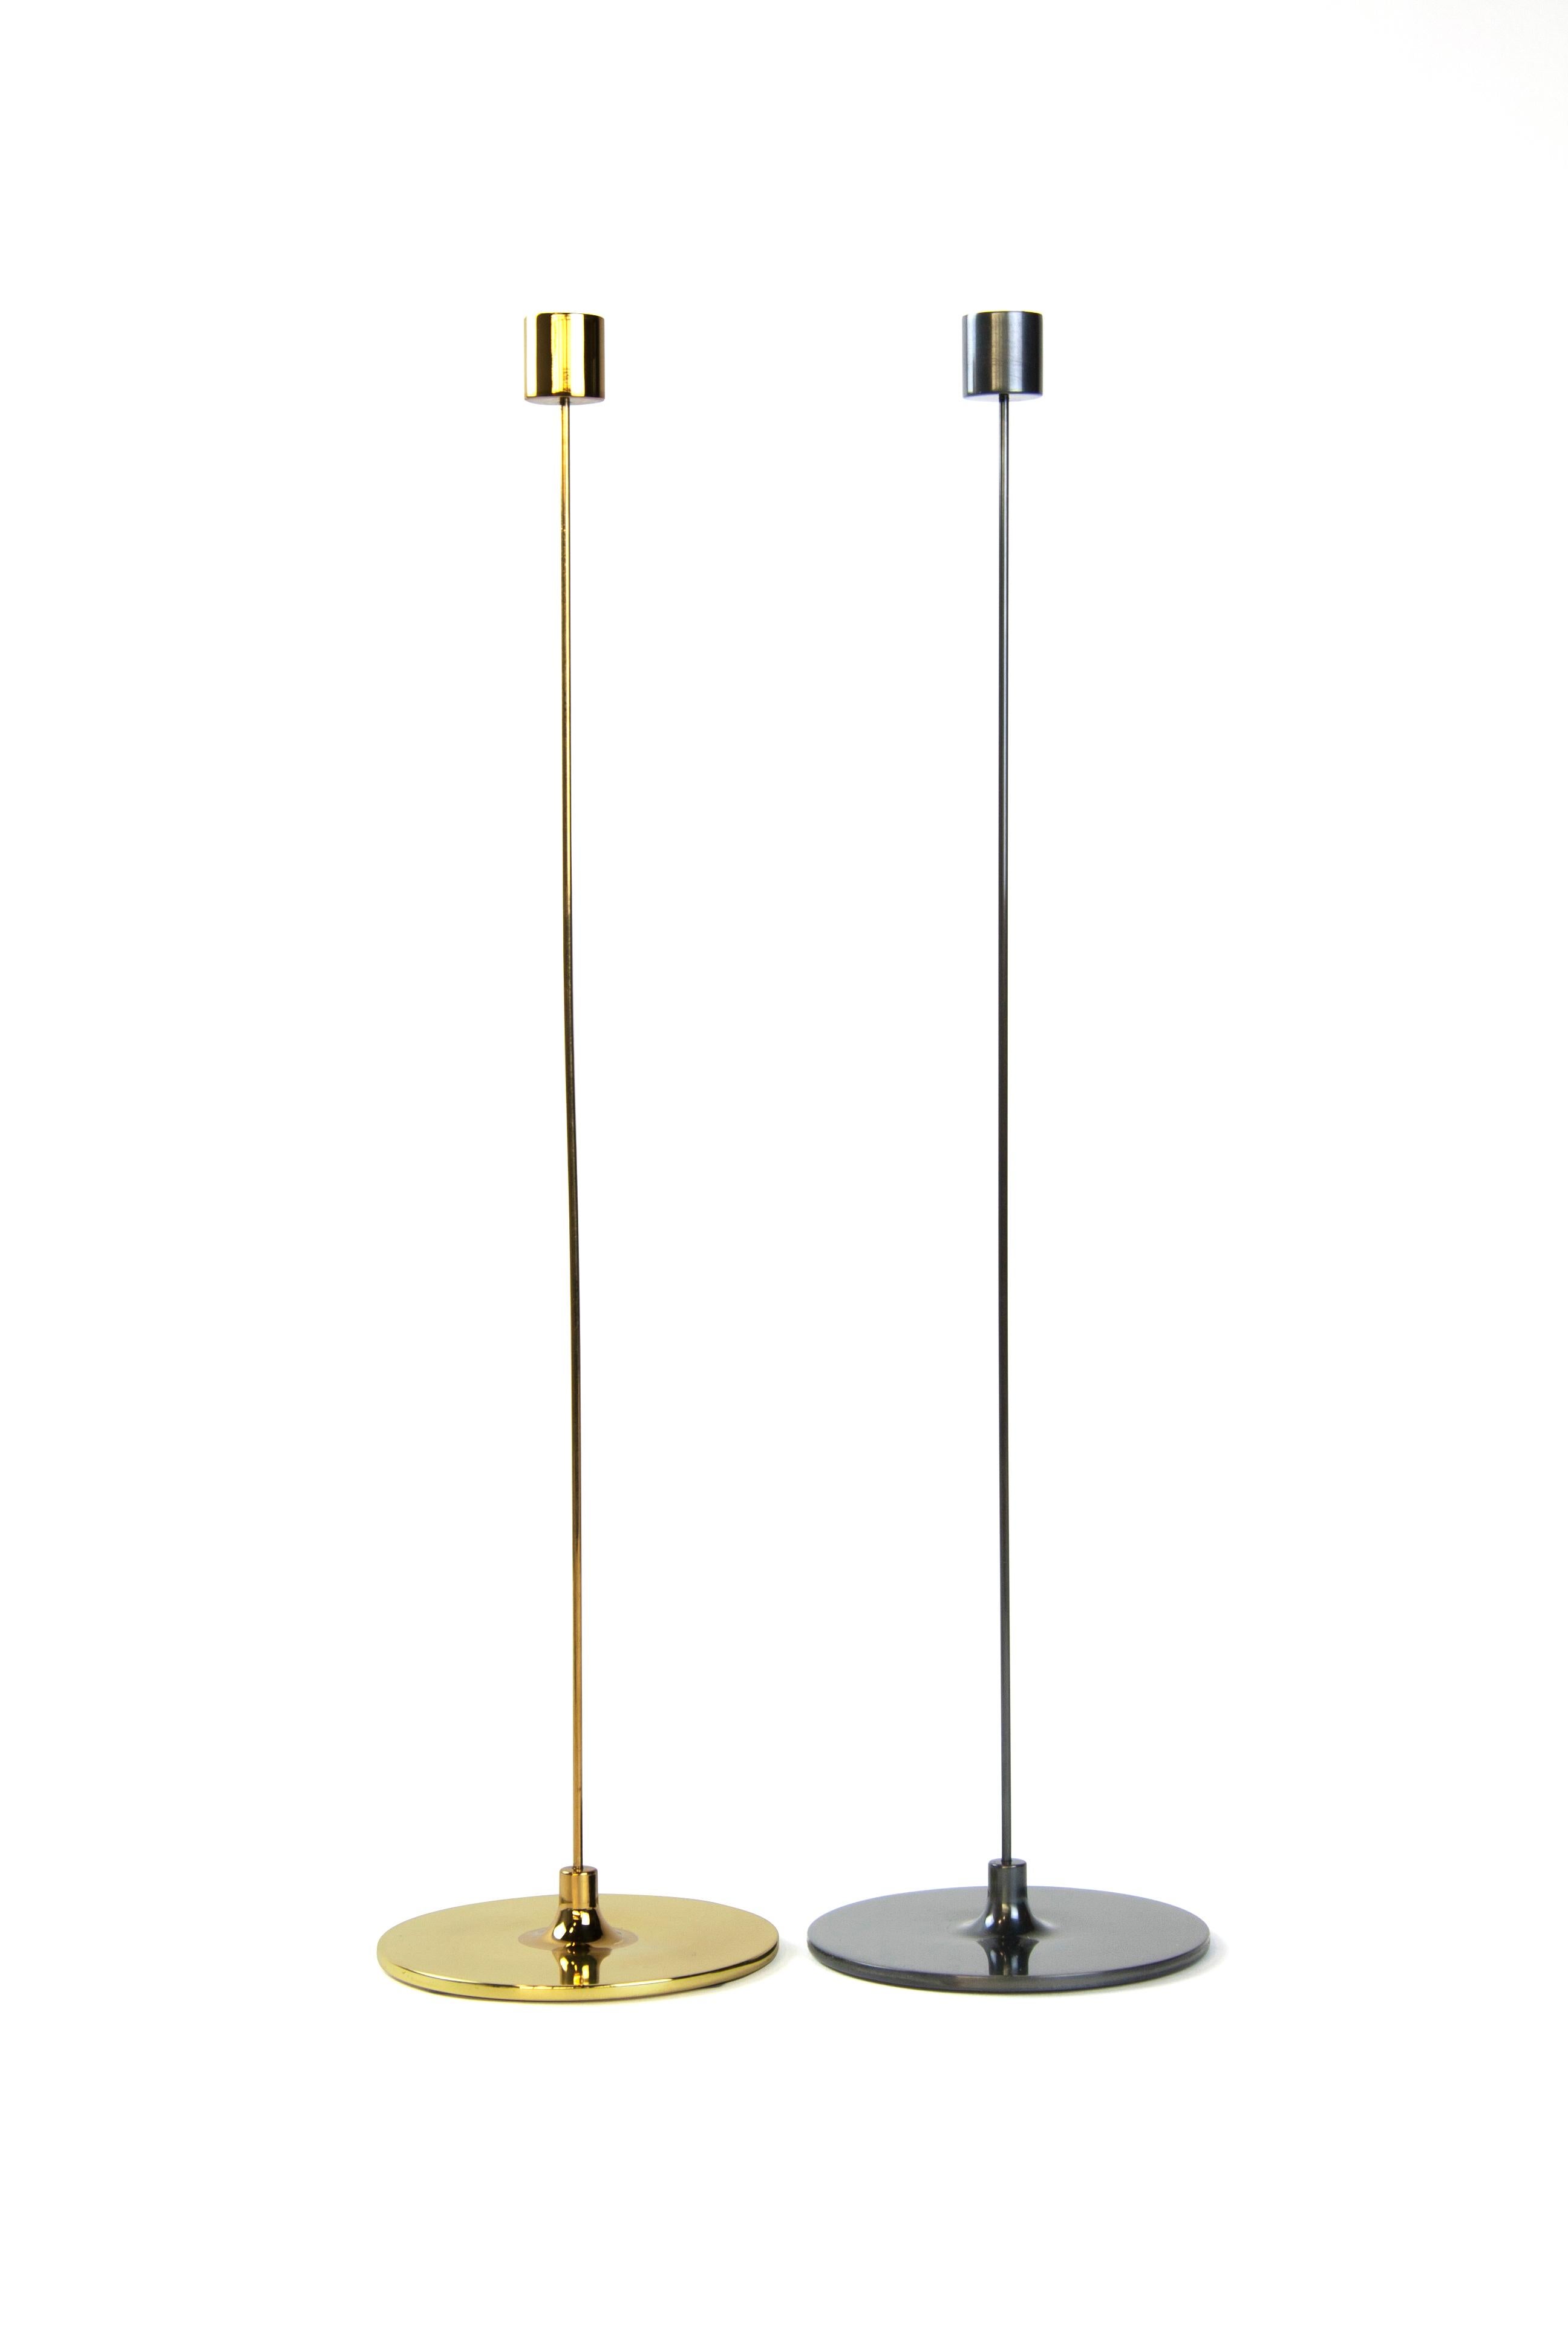 American Small Pin Darkened Brass Candlestick by Gentner Design